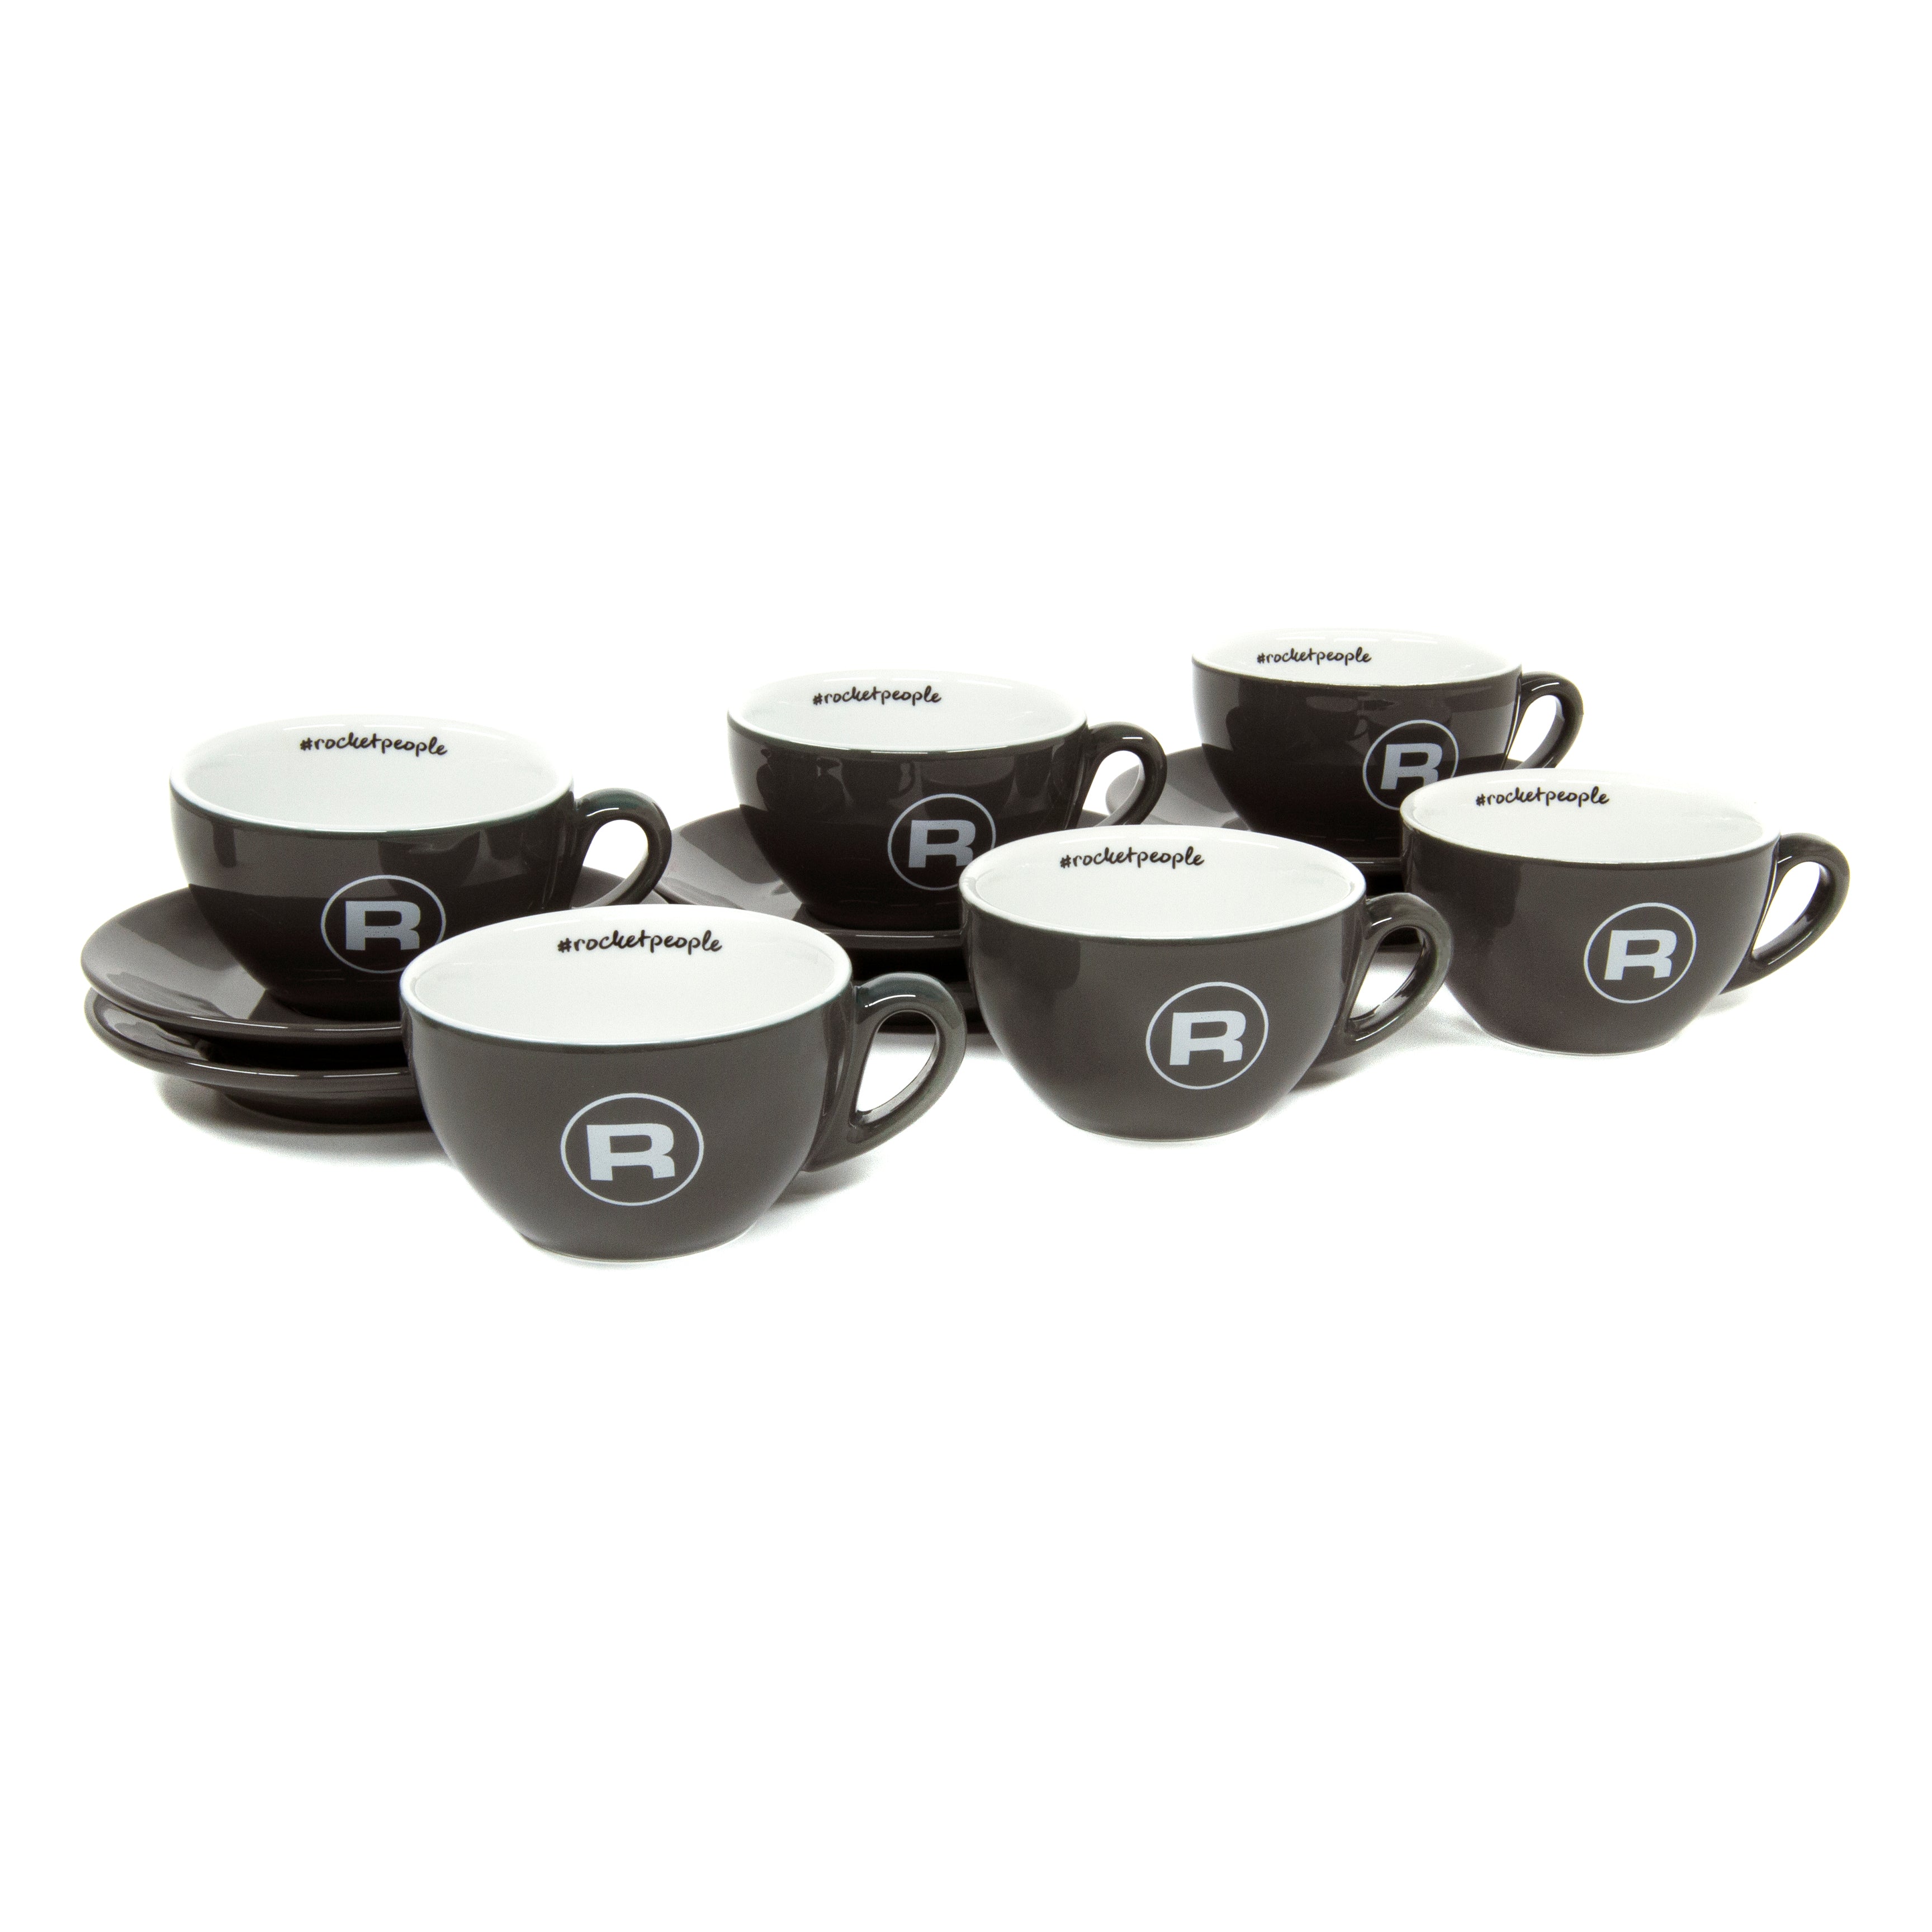 Rocket Espresso 6oz Cappuccino Cup, White, Porcelain - Set of 2